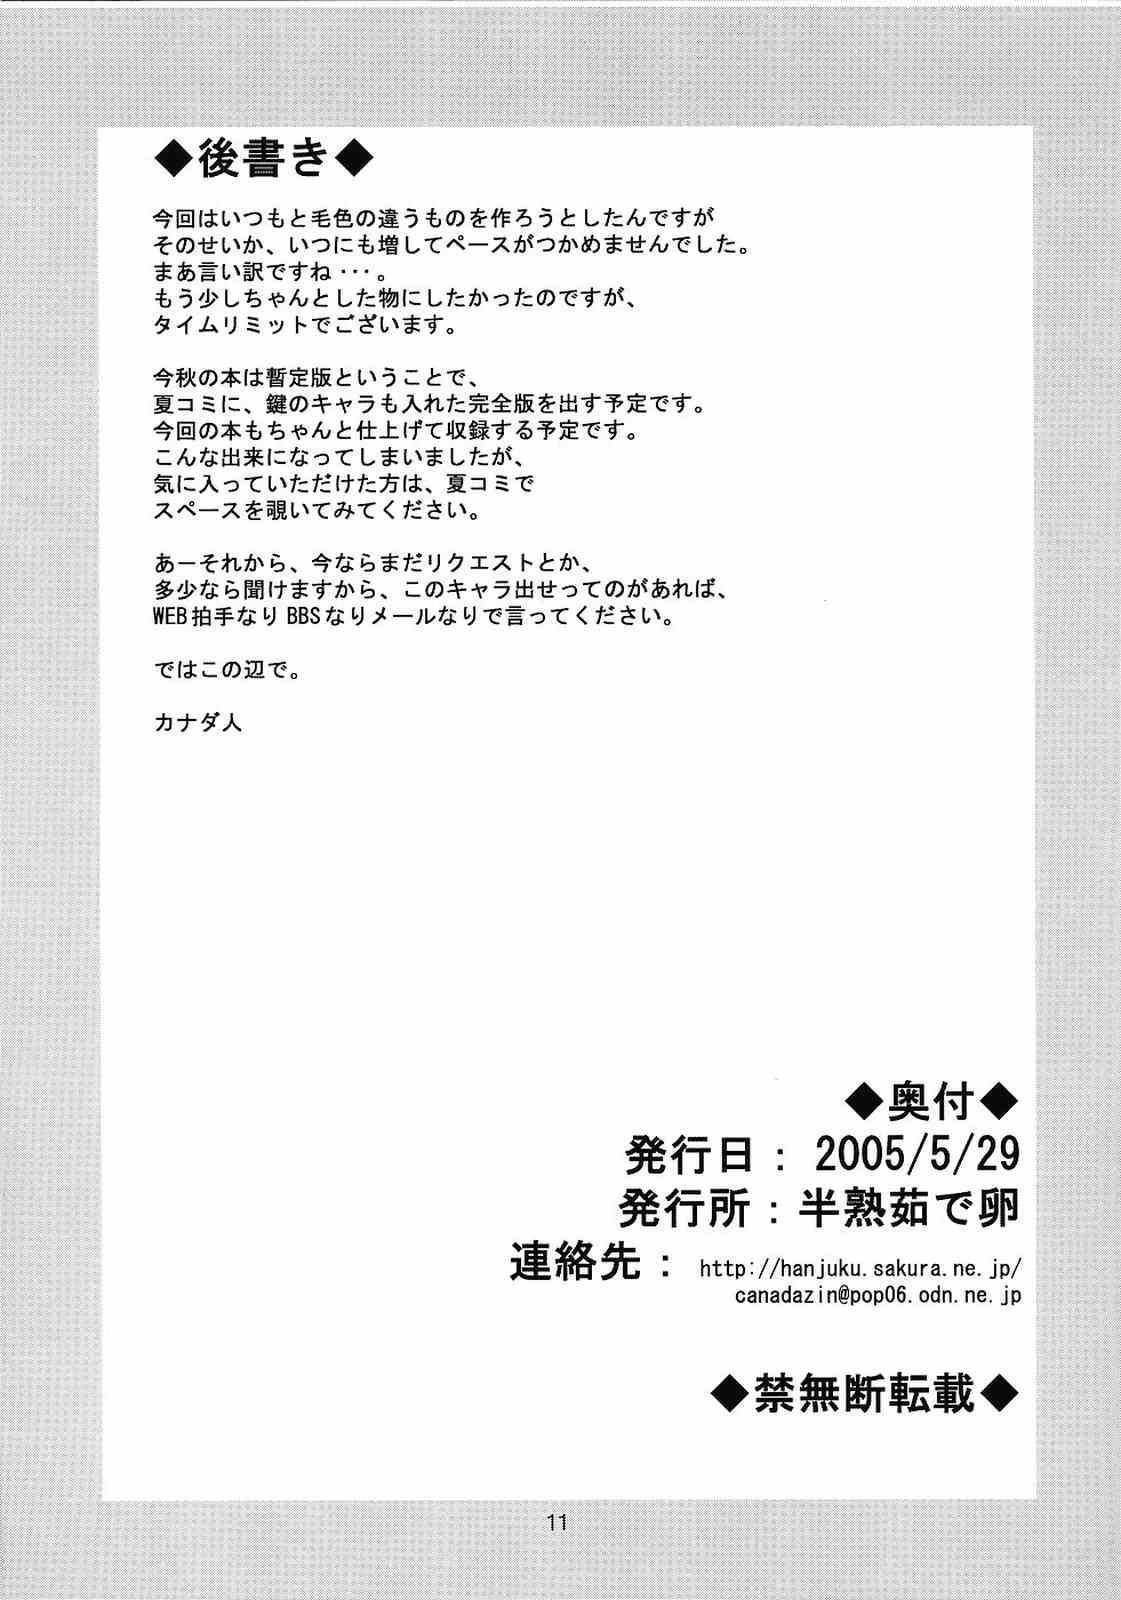 Grande Action Hakagijuku vol.0.5 - Toheart2 Stretching - Page 11